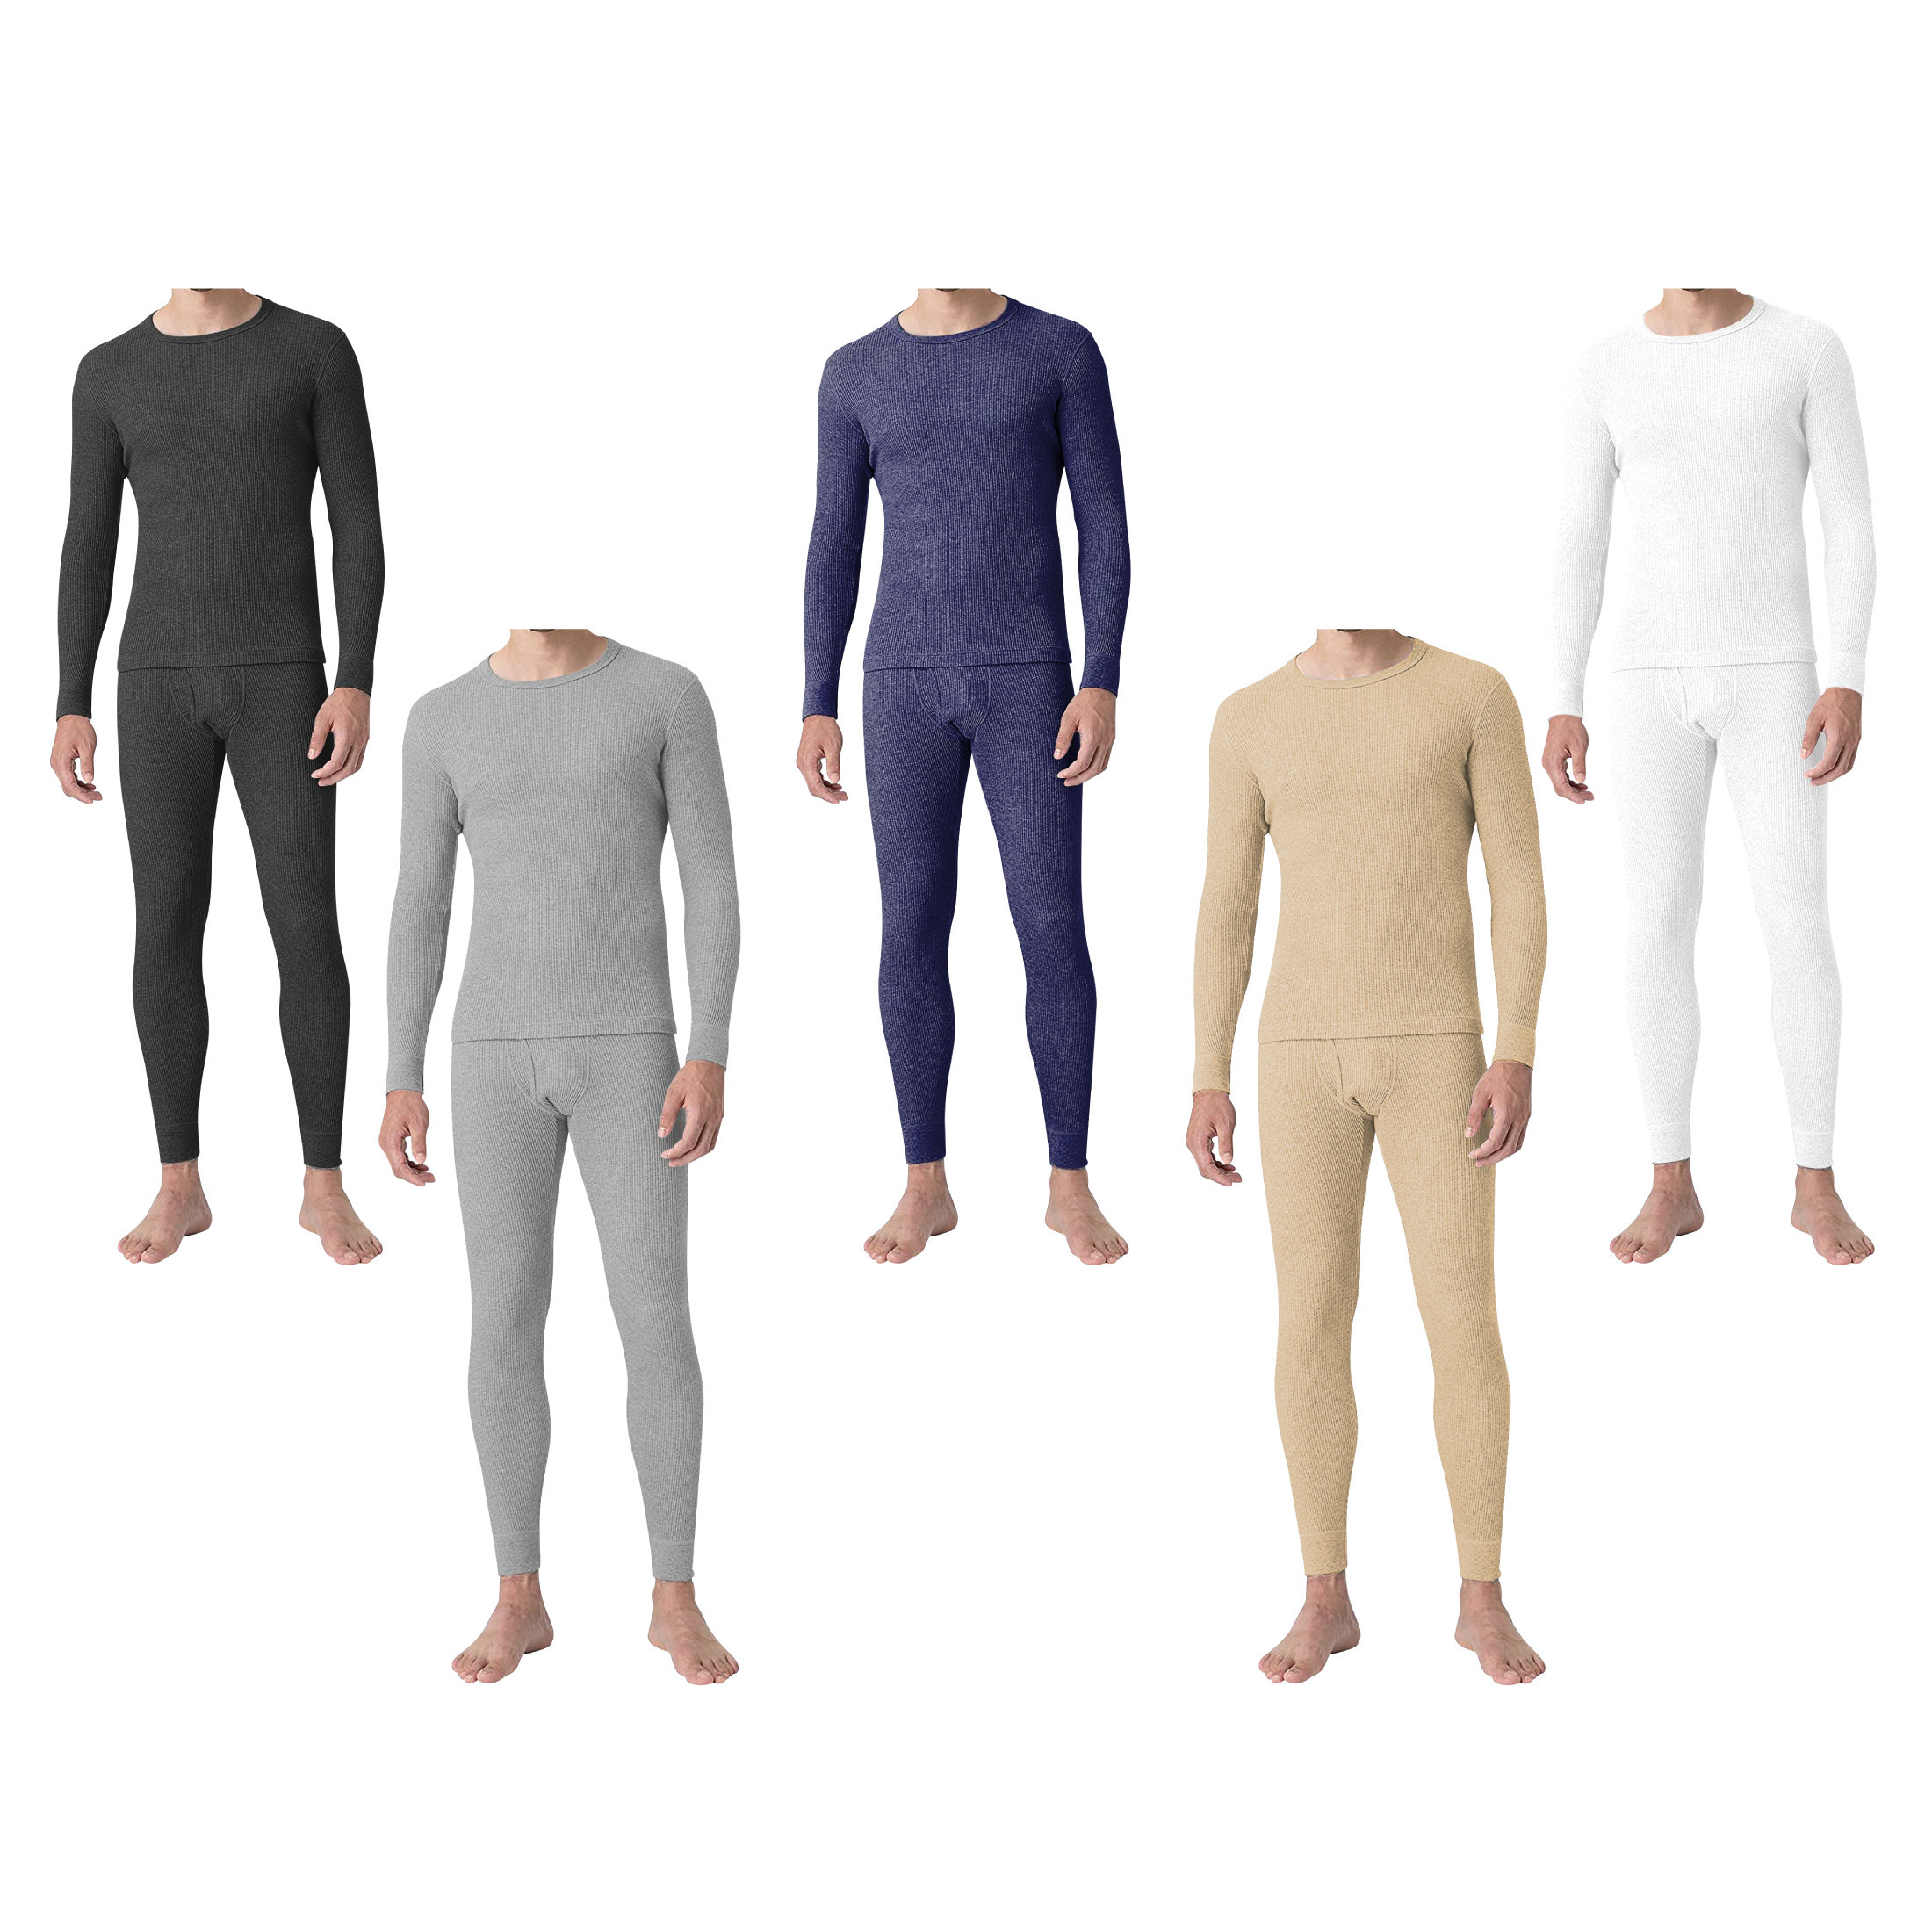 2-Sets: Men's Super Soft Cotton Waffle Knit Winter Thermal Underwear Set - Navy & Navy, Medium